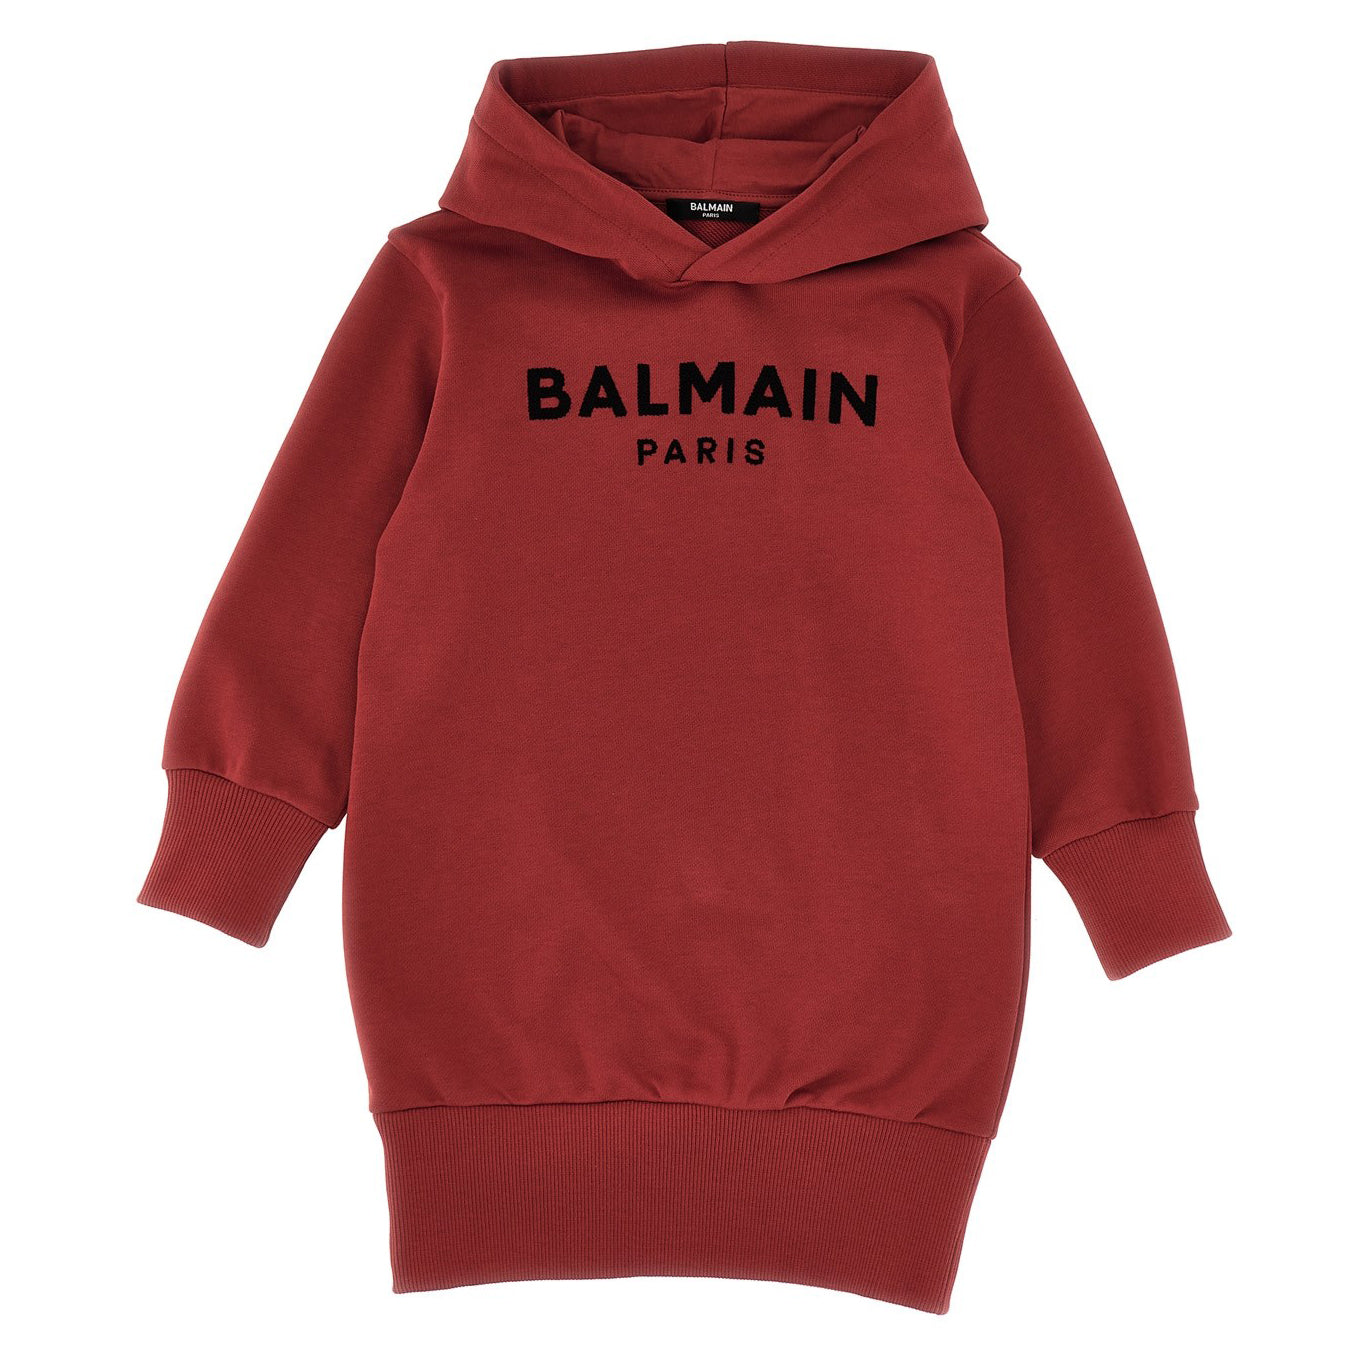 BALMAIN KIDS Logo Embroidery Hooded Dress